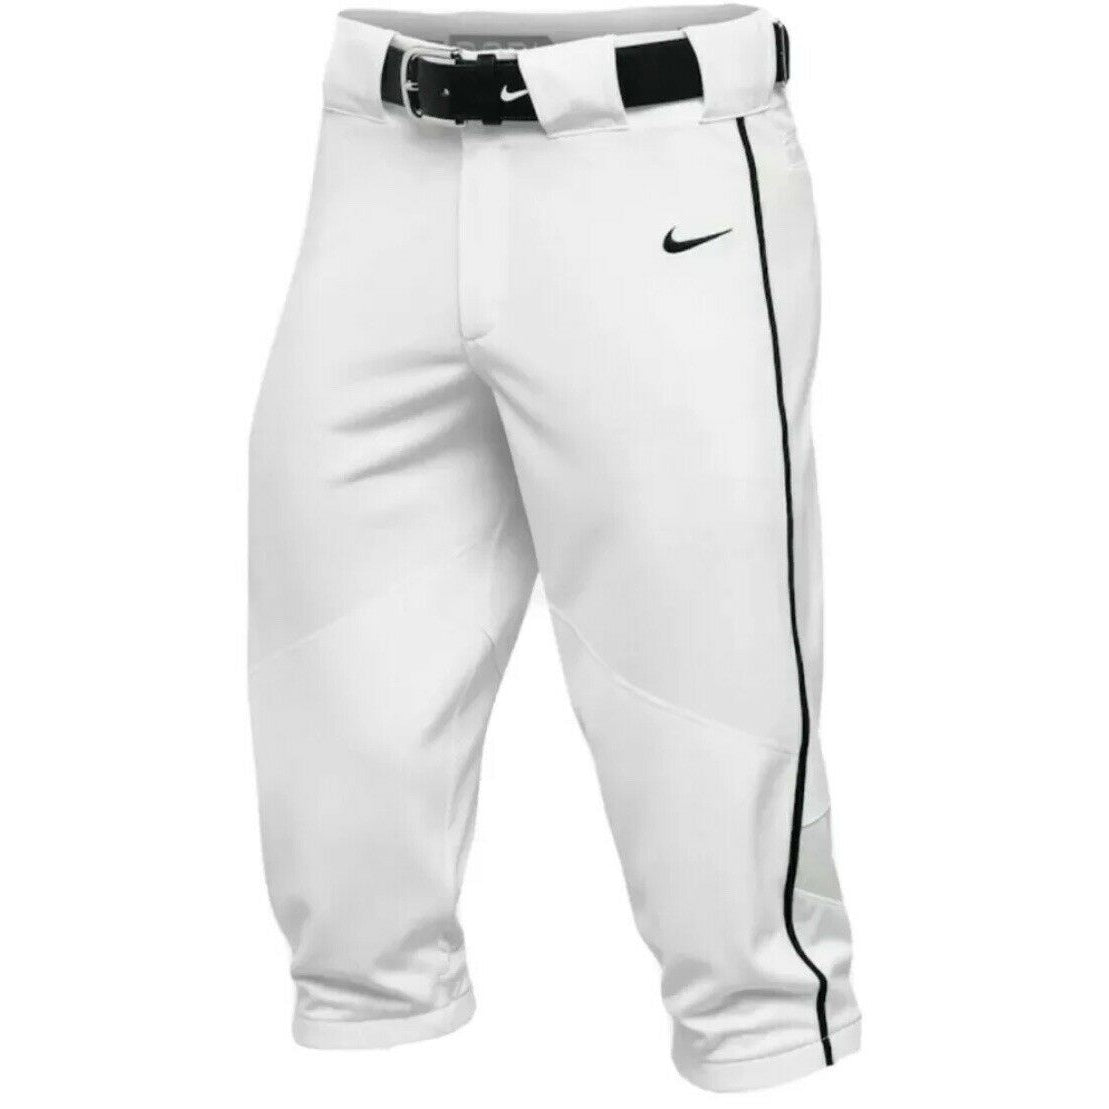 Nike Vapor Select 1 Button Baseball Jersey